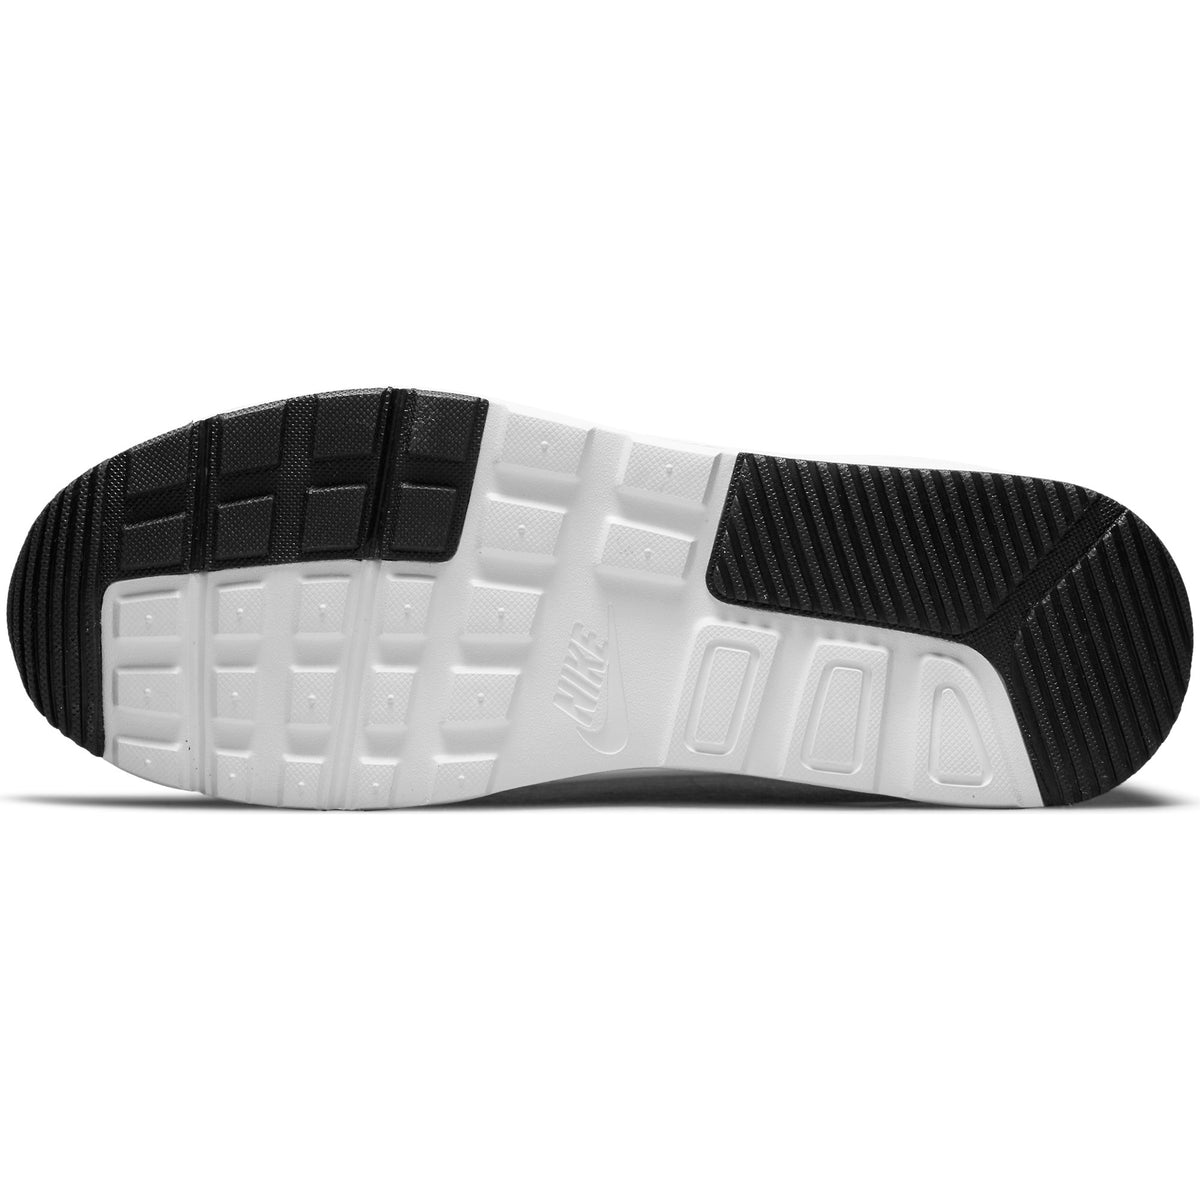 Zapatilla Nike Air Max SC de hombre color Negro